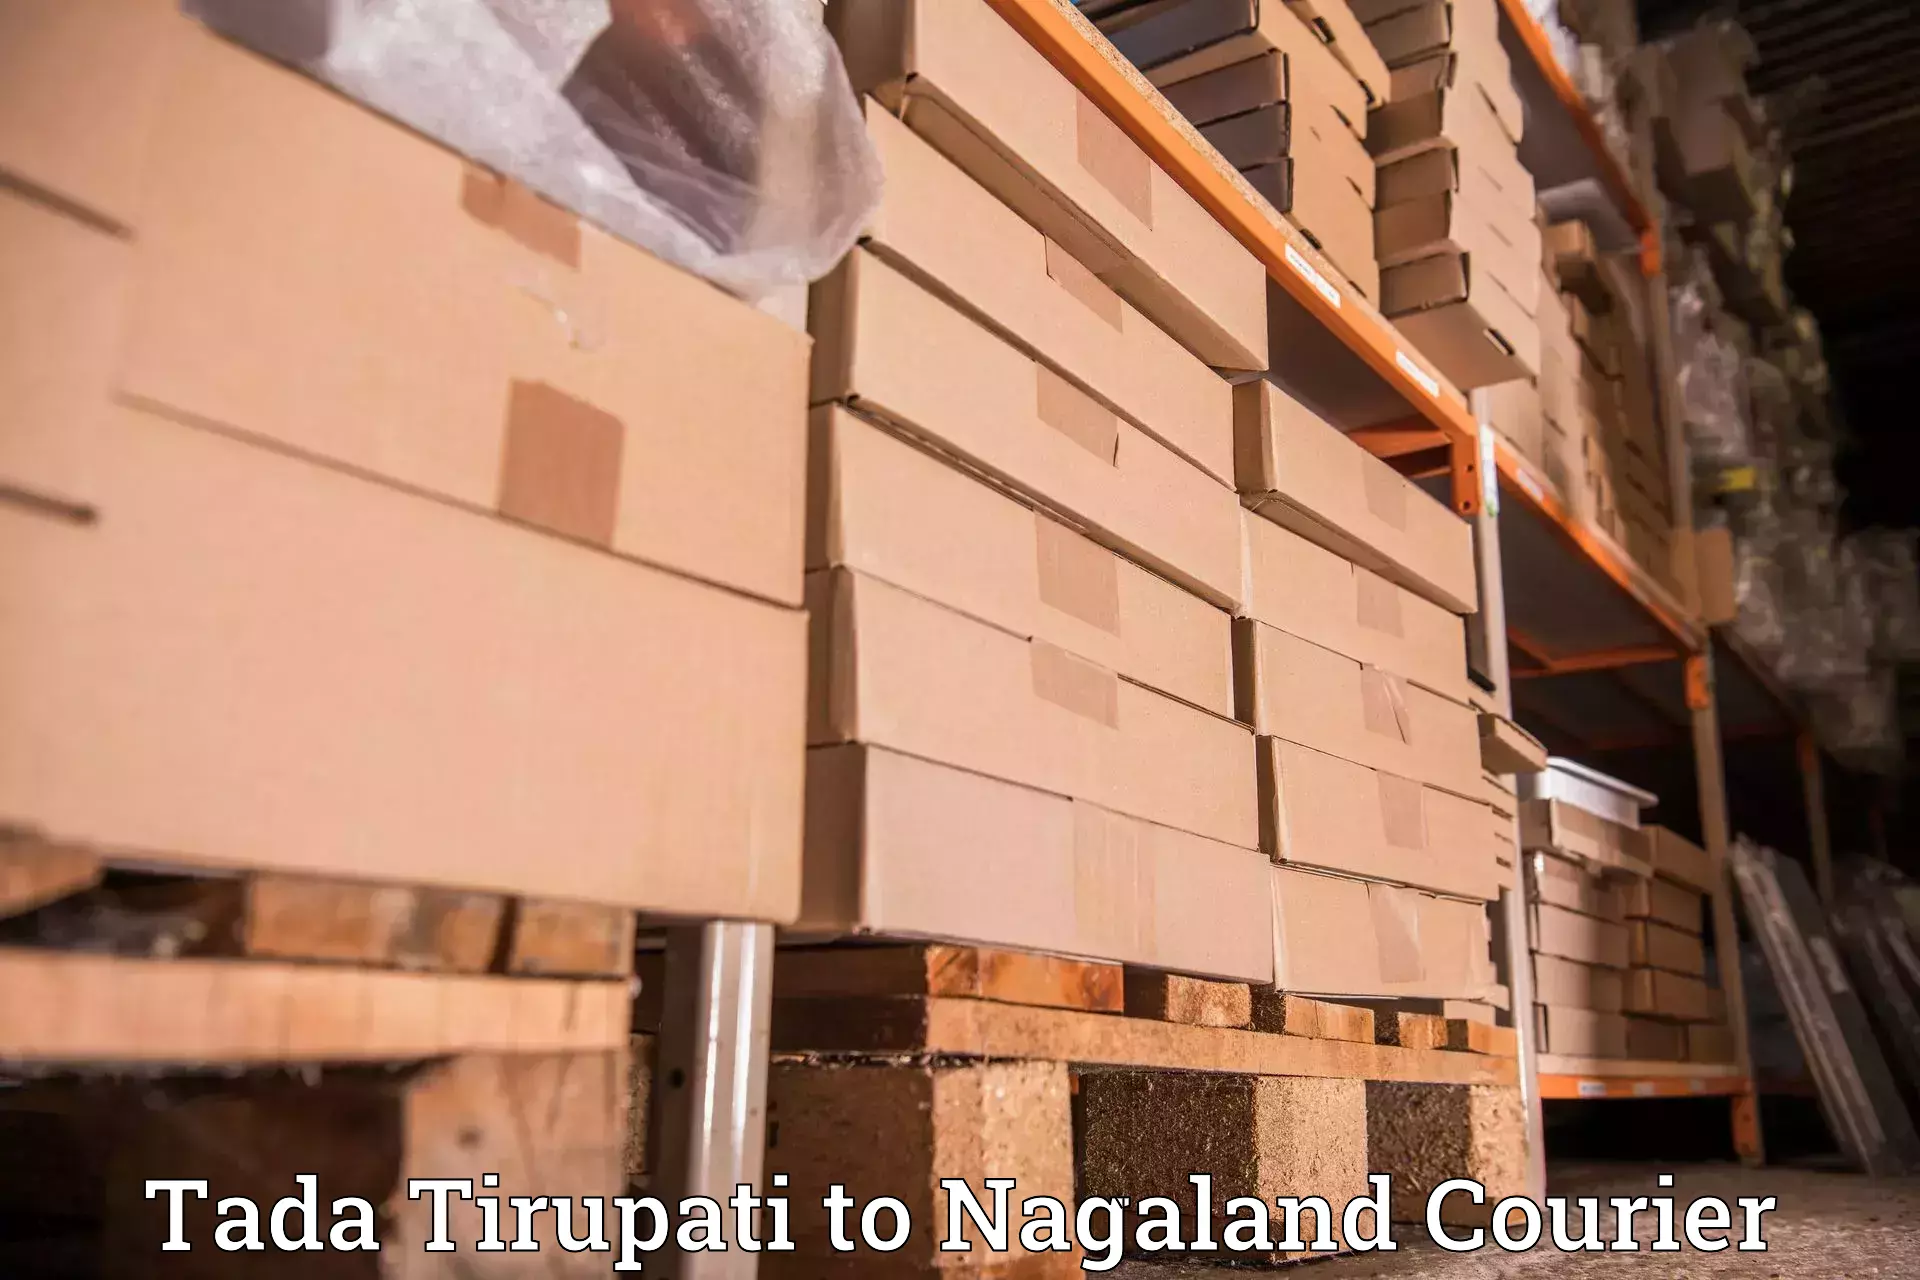 Seamless shipping experience Tada Tirupati to Nagaland